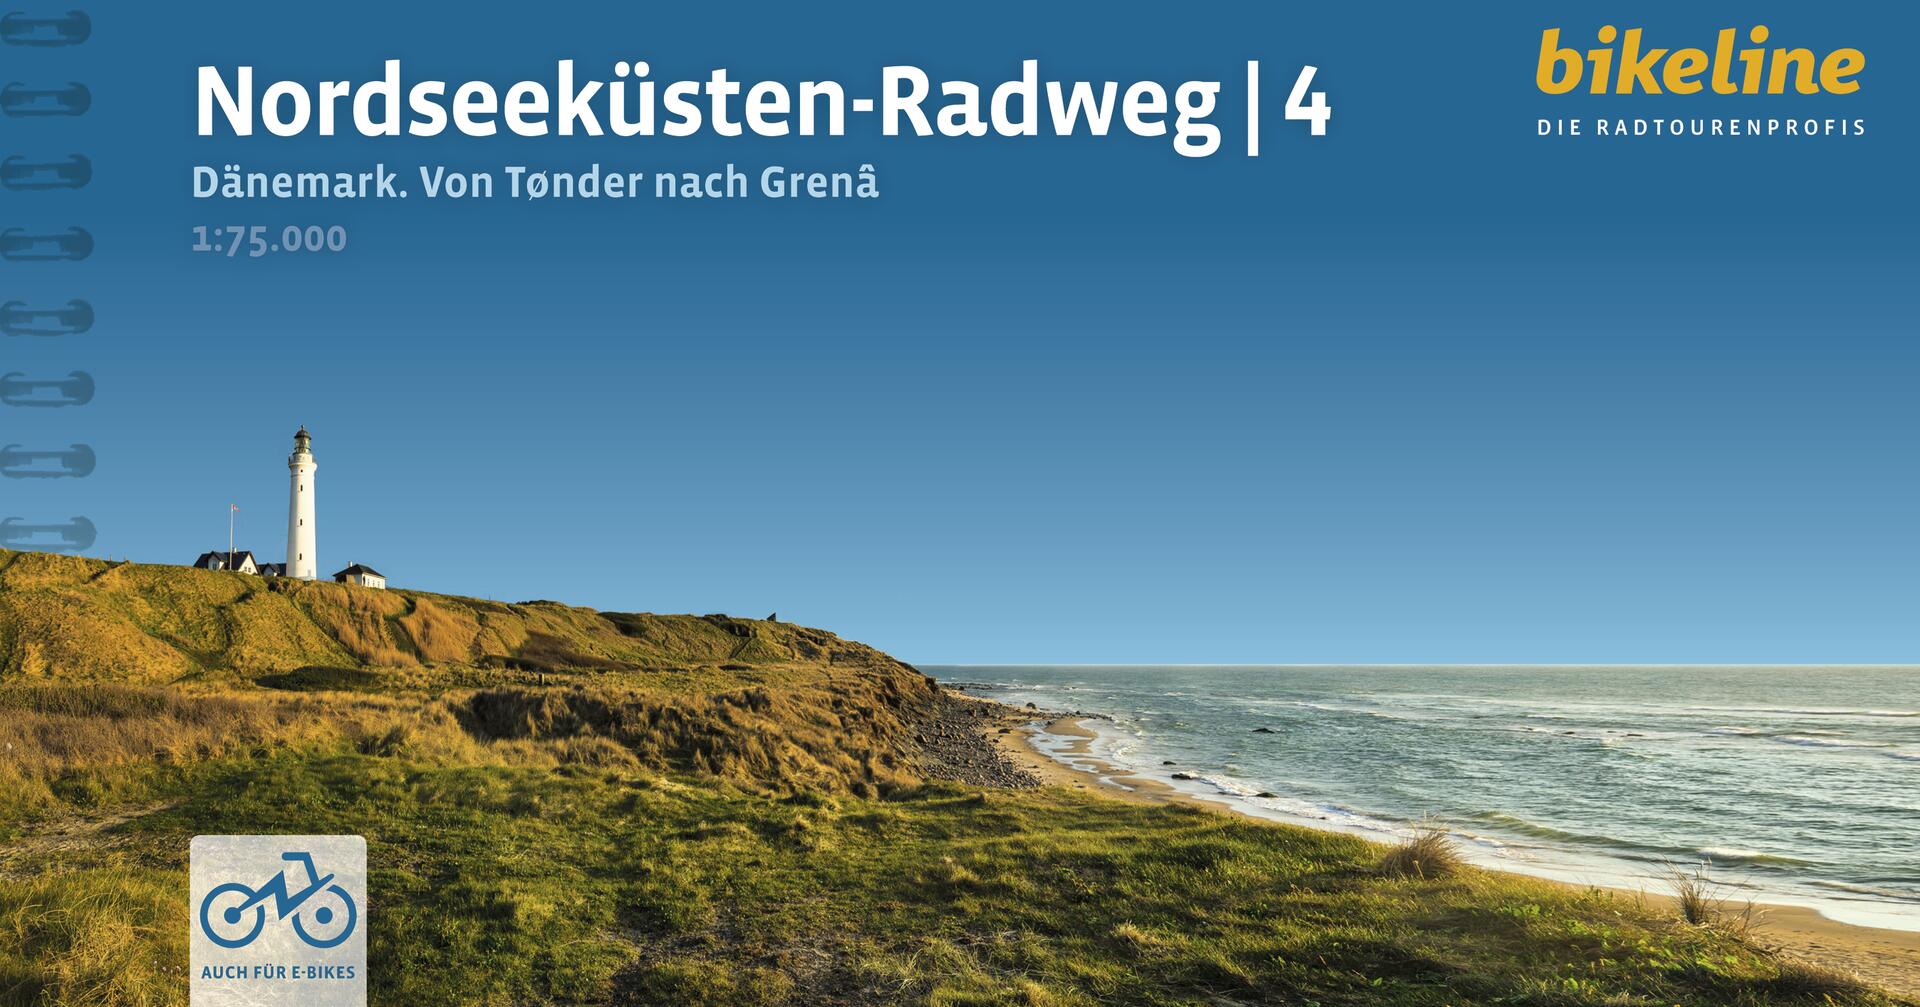 Online bestellen: Fietsgids Bikeline Nordseekusten radweg 4 (NSCR) teil 4 Danmark - Denemarken NSCR | Esterbauer